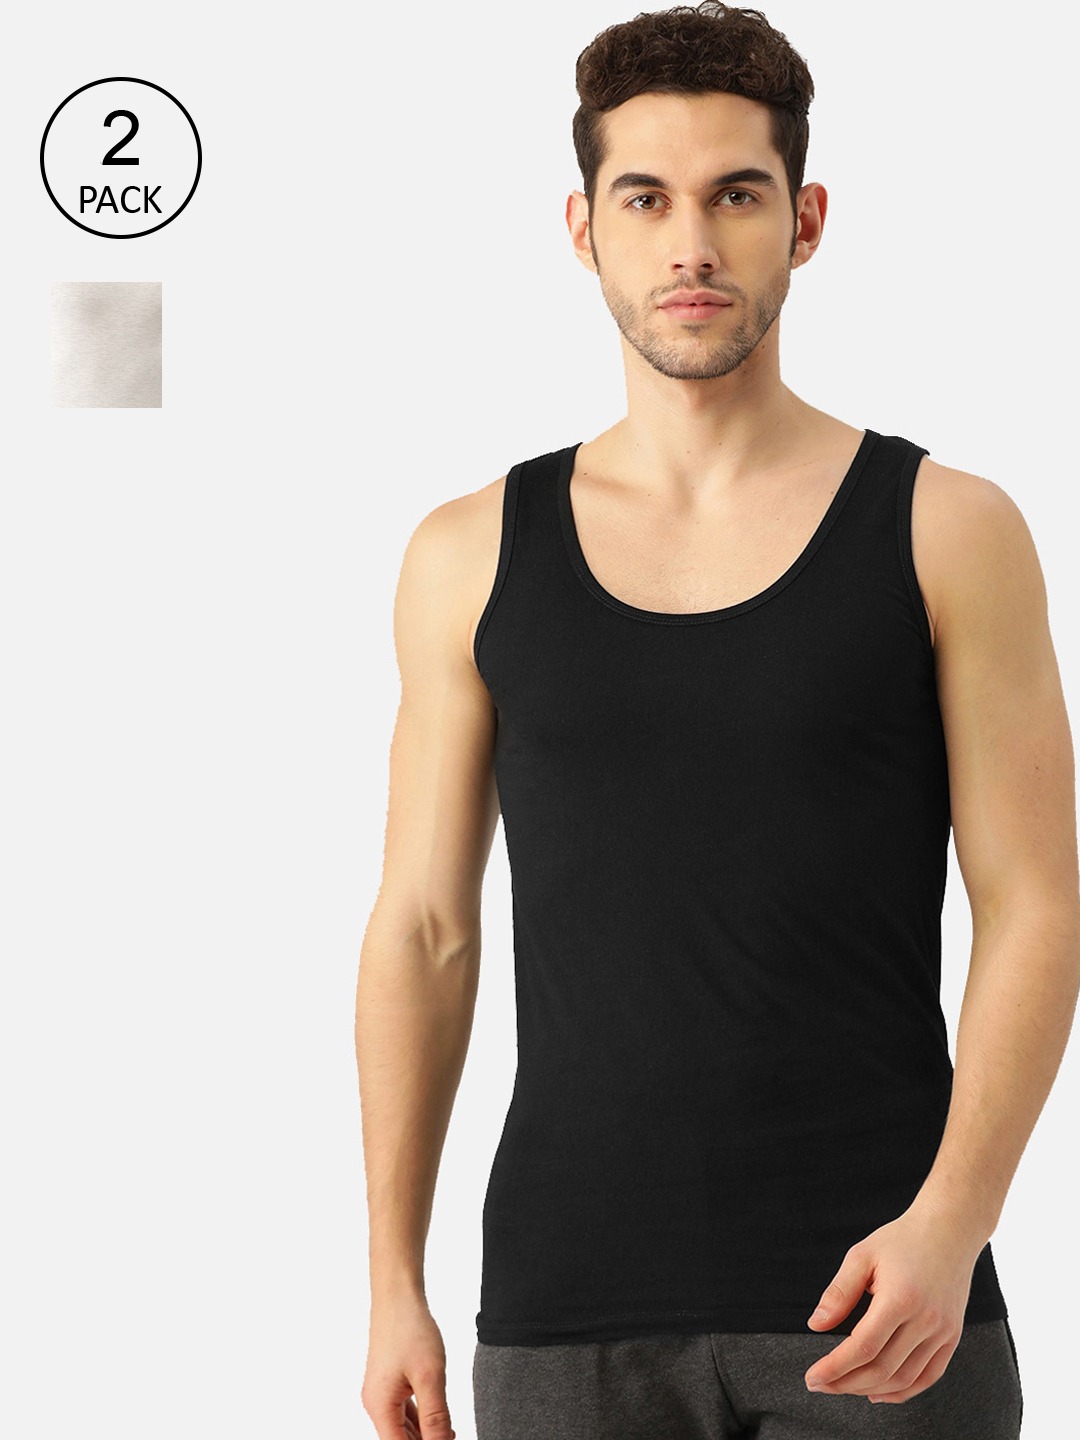 Clothing Innerwear Vests | ROMEO ROSSI Men Black & Light Grey Pack of 2 Cotton Vests - EU29040